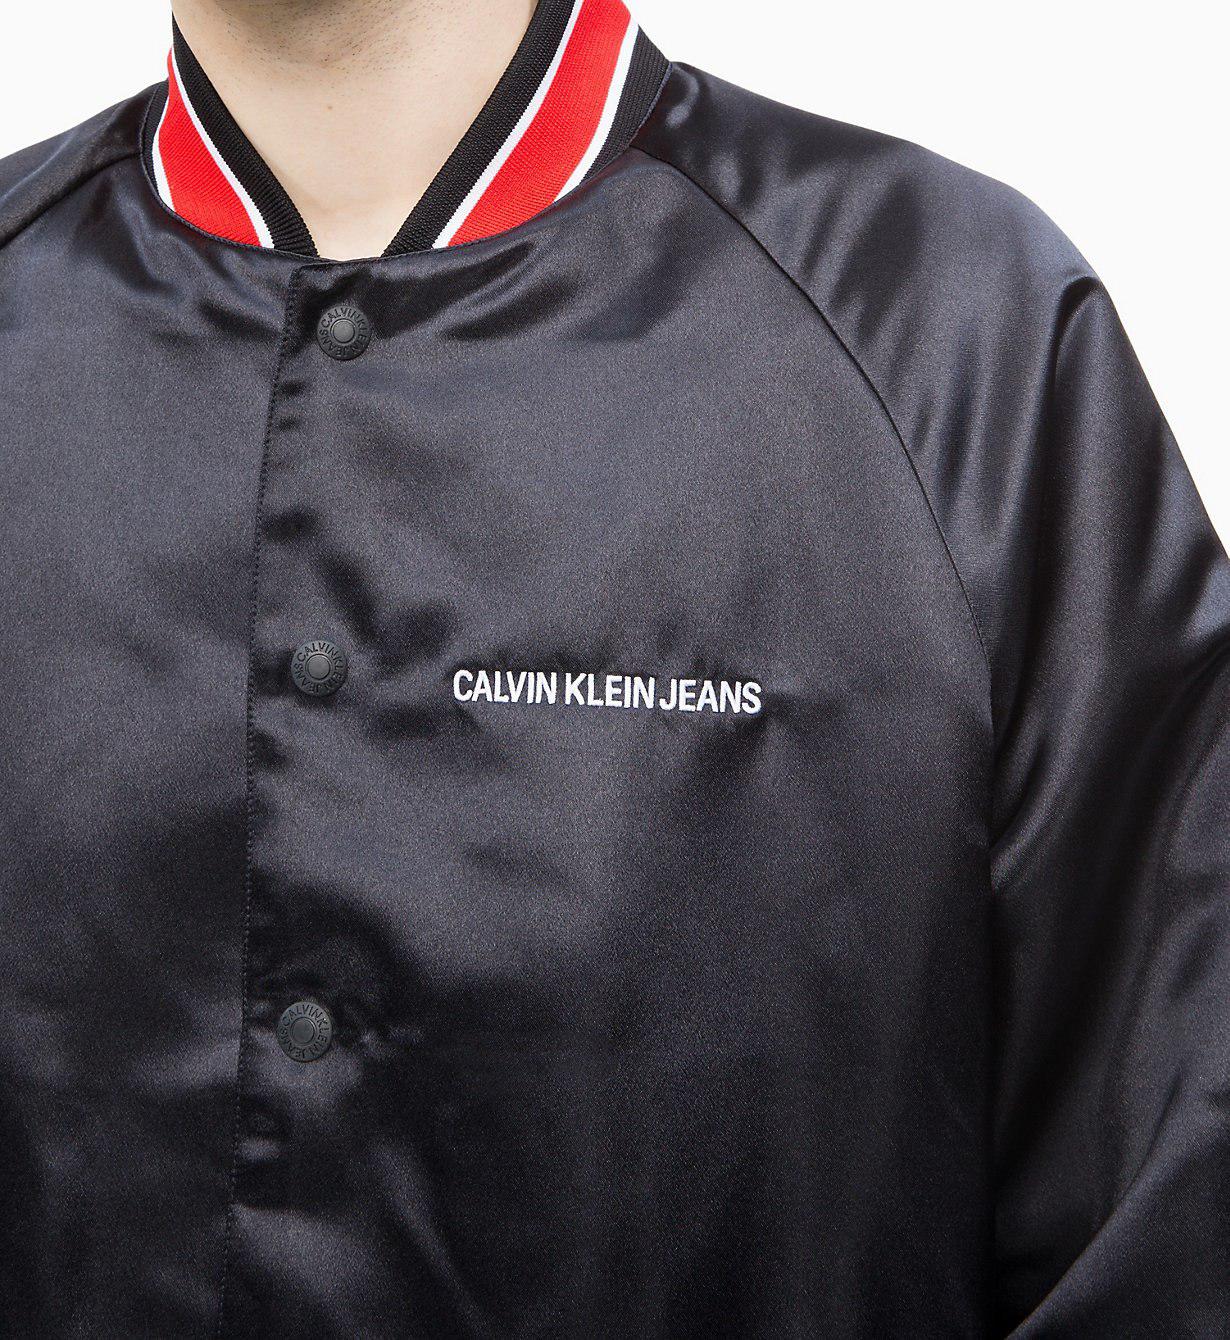 Calvin Klein Denim Satin Bomber Jacket in Black for Men - Lyst